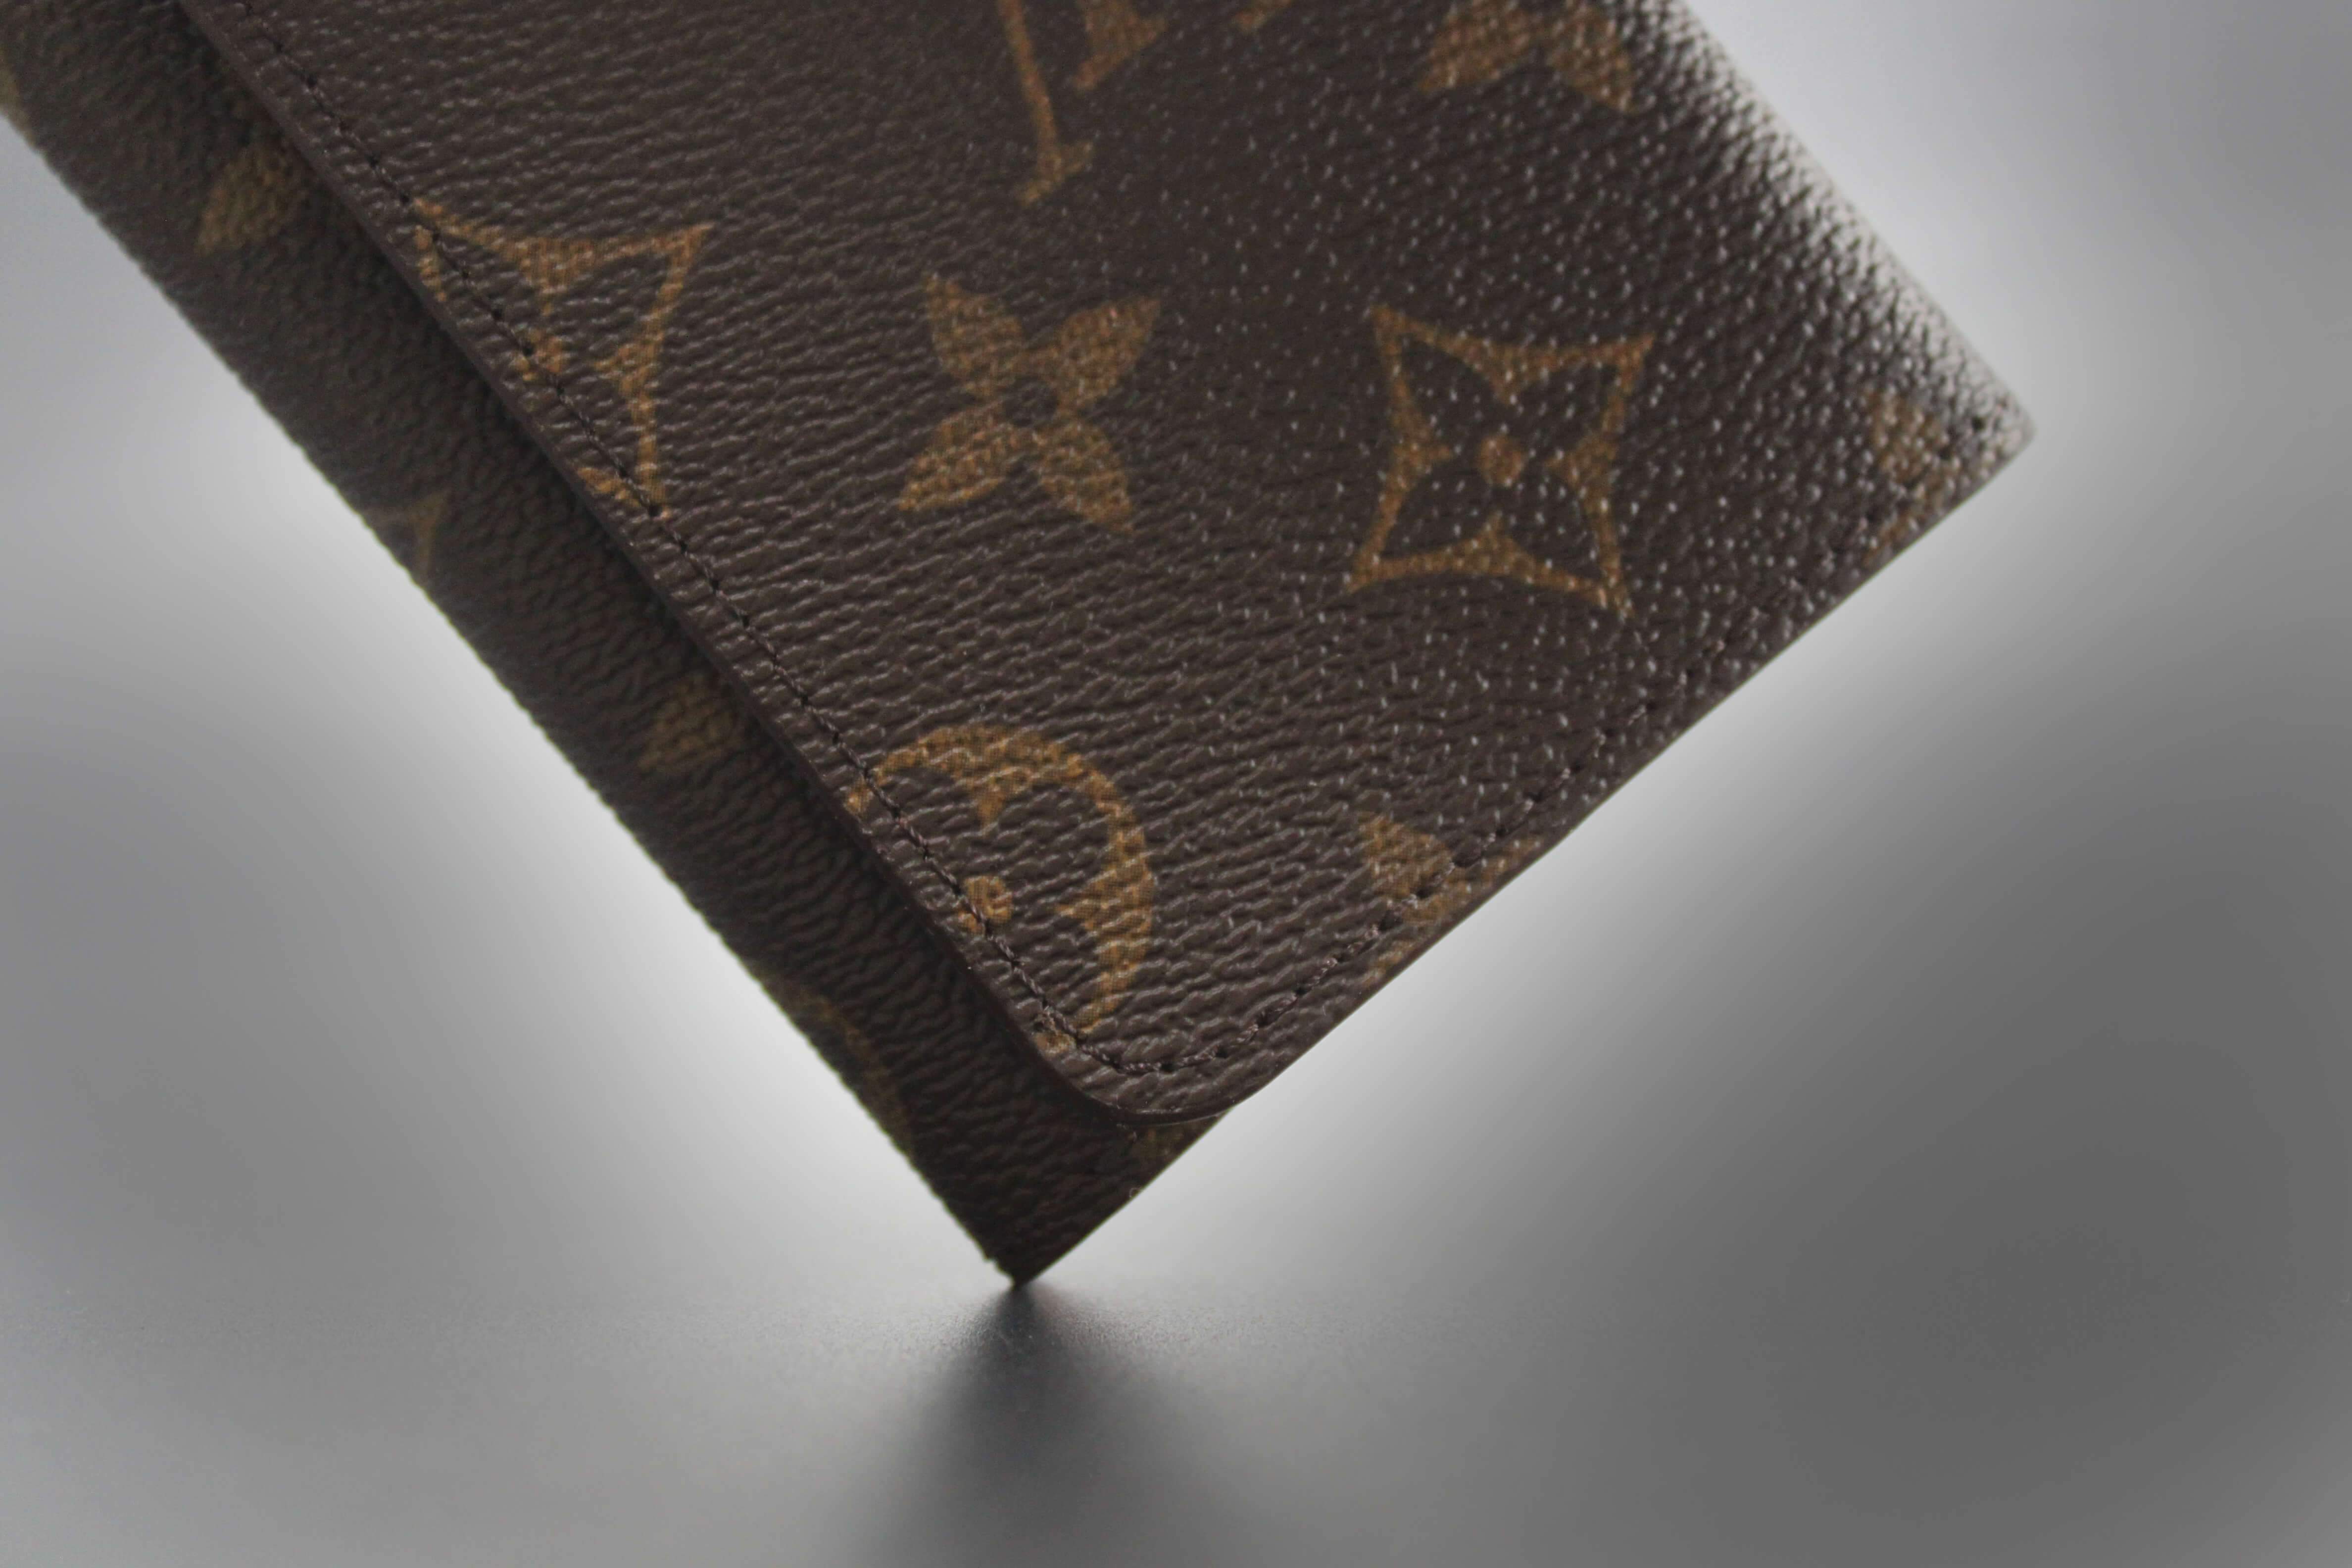 Brown Monogram Repurposed LV Fold Wallet